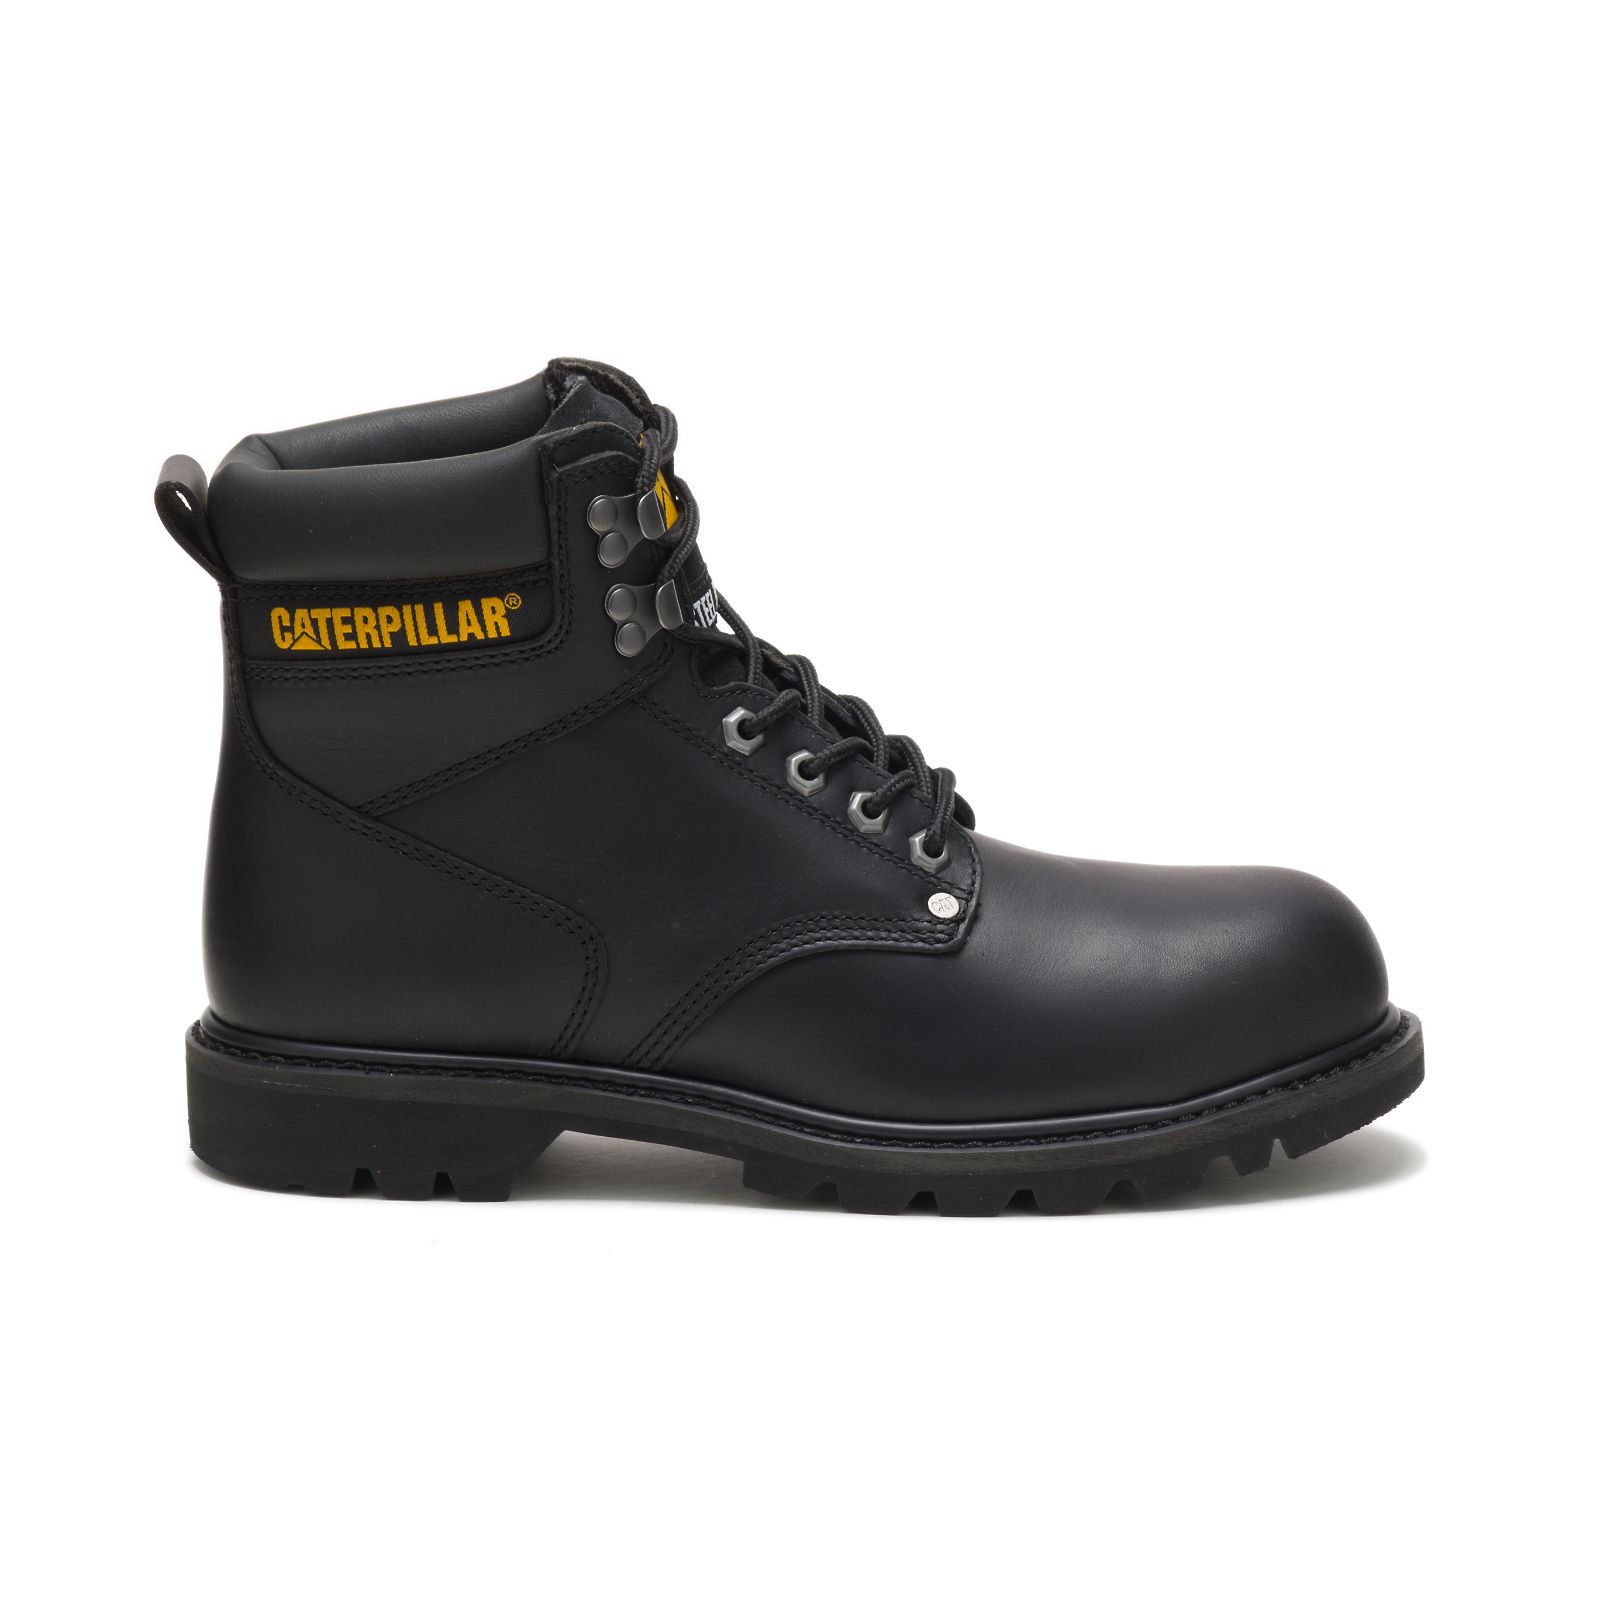 Men's Caterpillar Second Shift Steel Toe Steel Toe Boots Black | Cat-120539